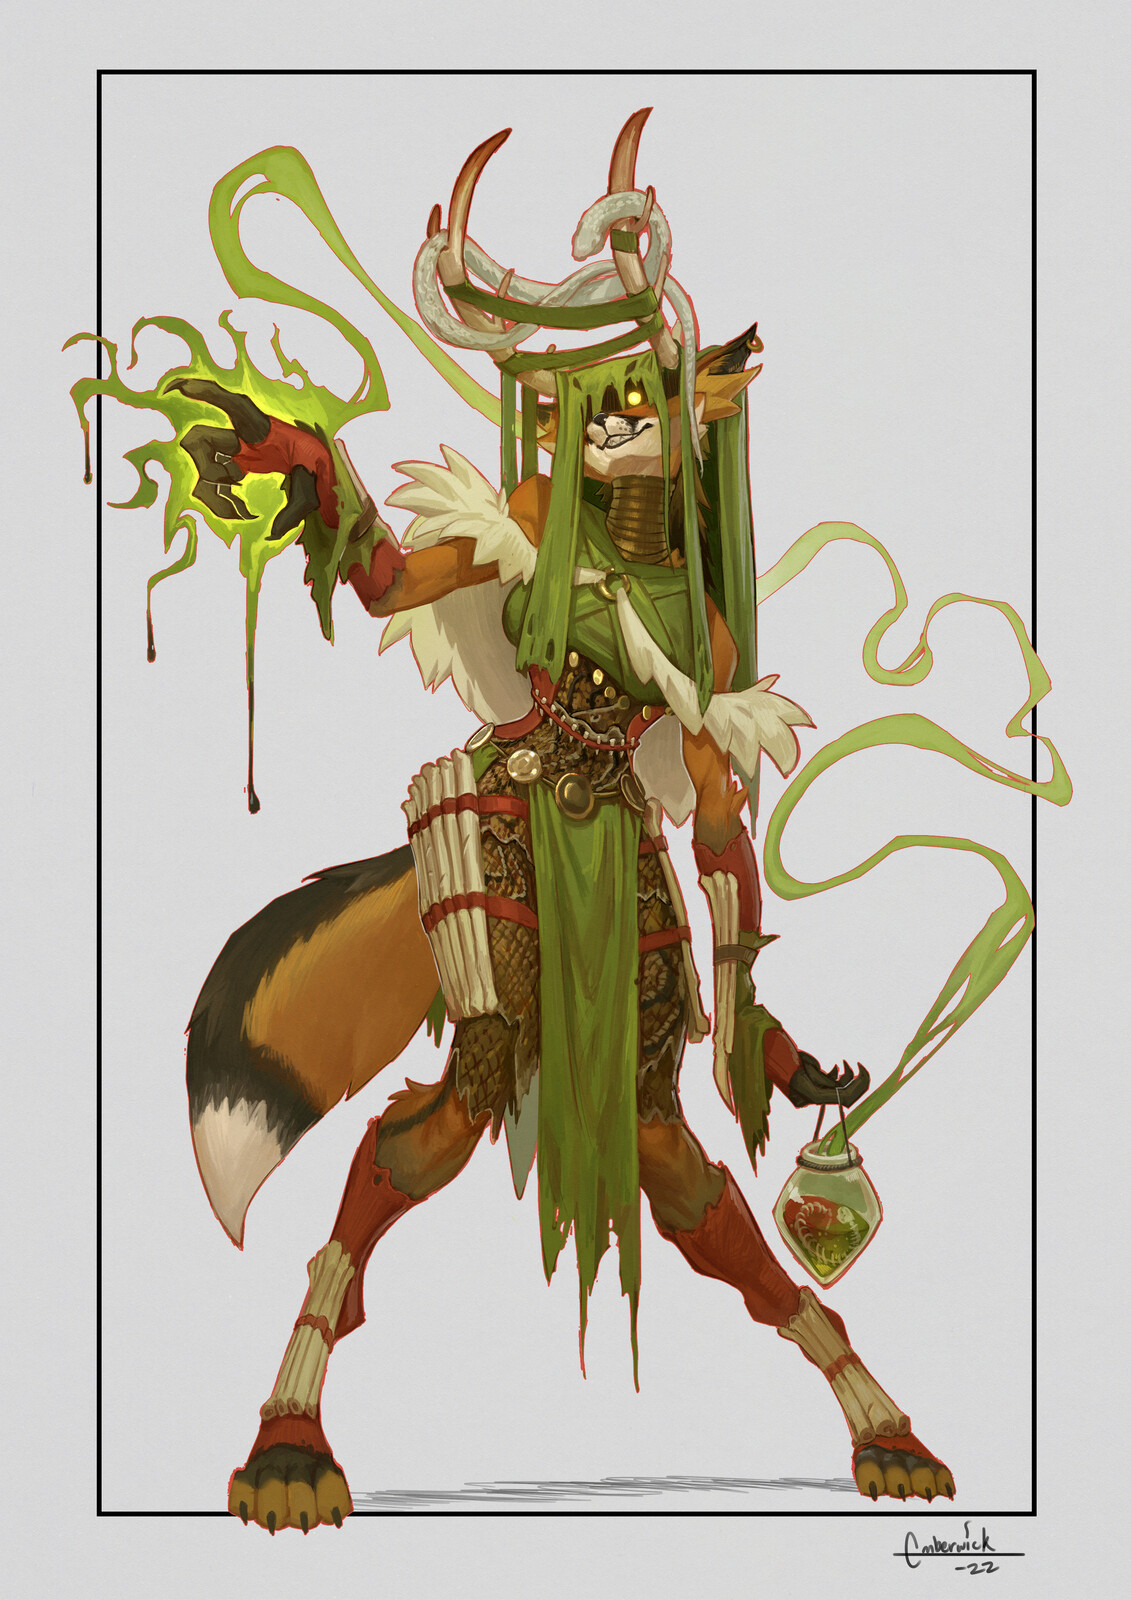 Venomancer

Color: Green
Weapon: Magic
Species: Fox